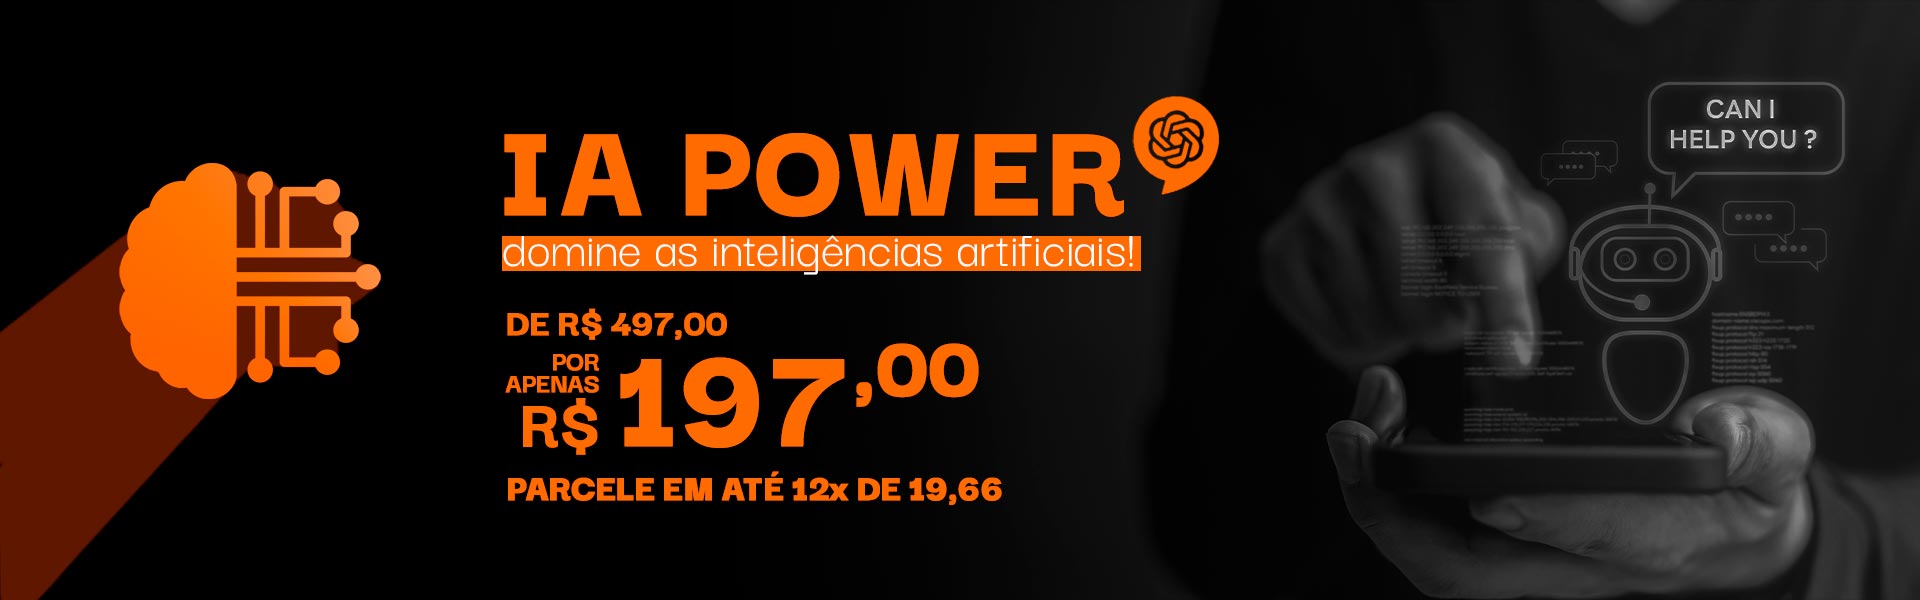 Banner_IA-POWER